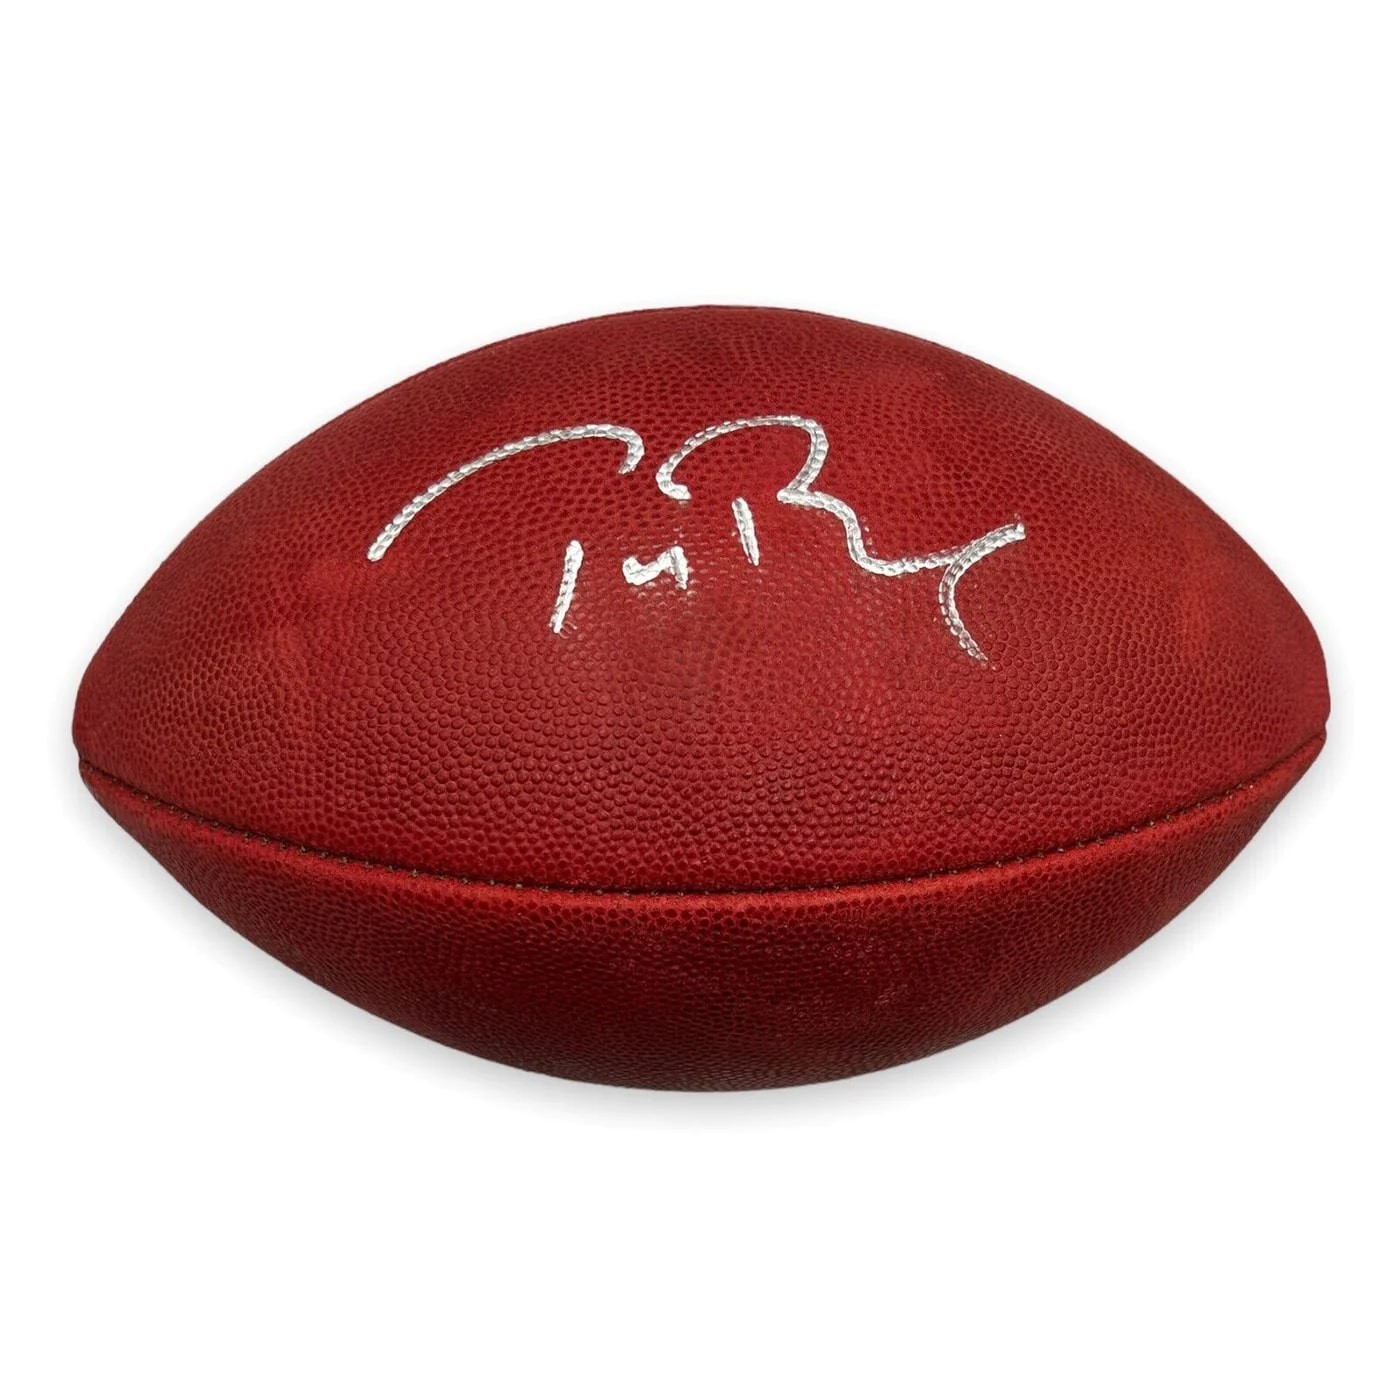 Tom Brady Autographed Official NFL Duke Football